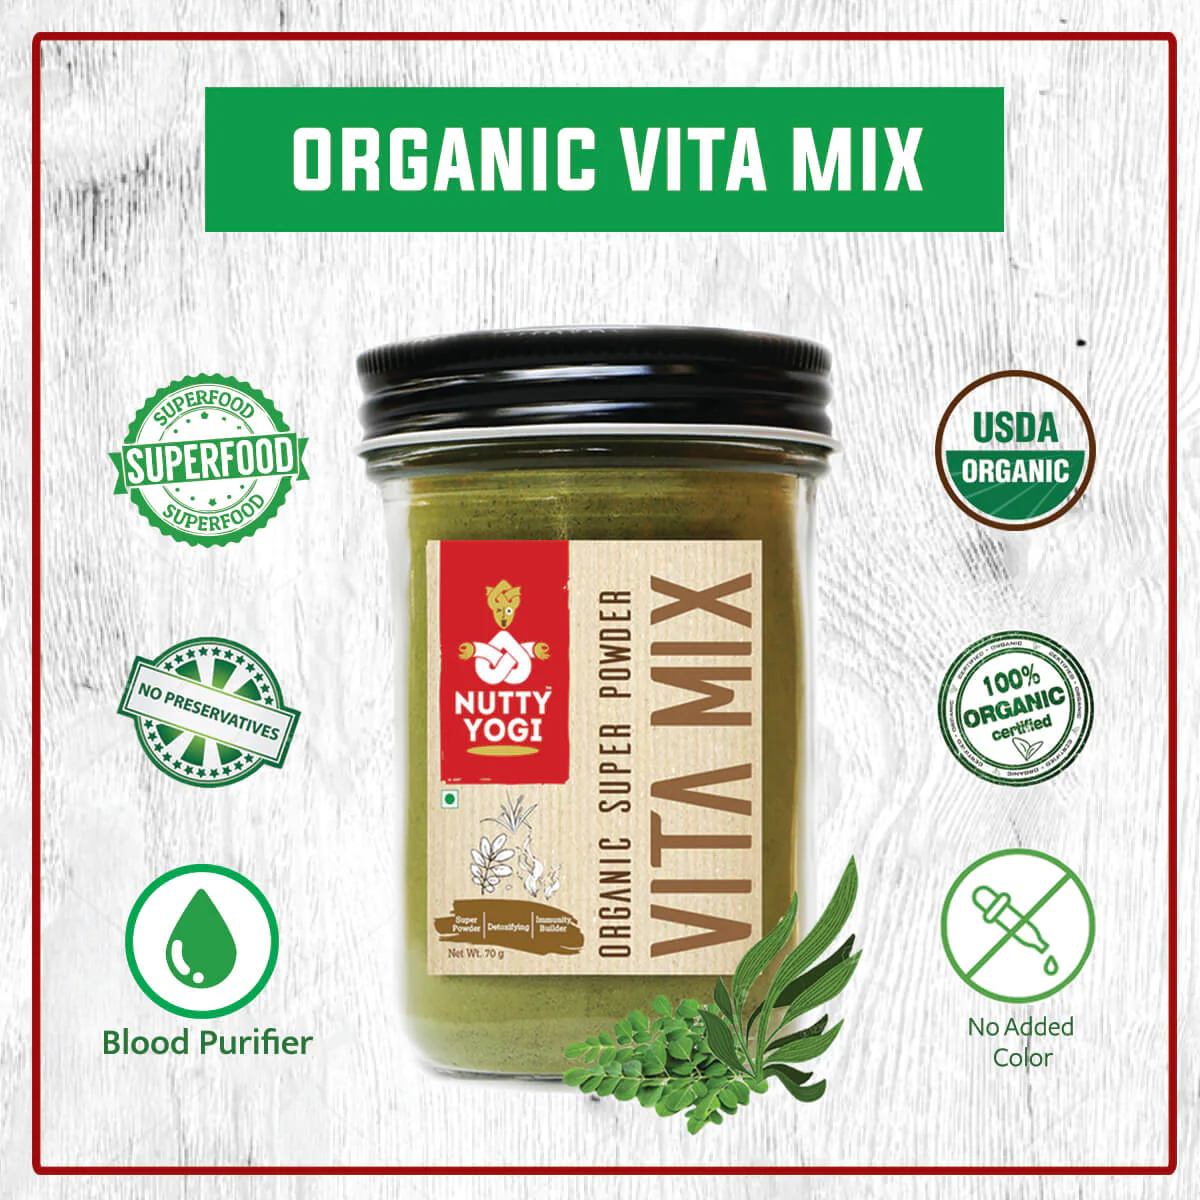 Product: Nutty Yogi Organic Super Powder Vita Mix 70 g